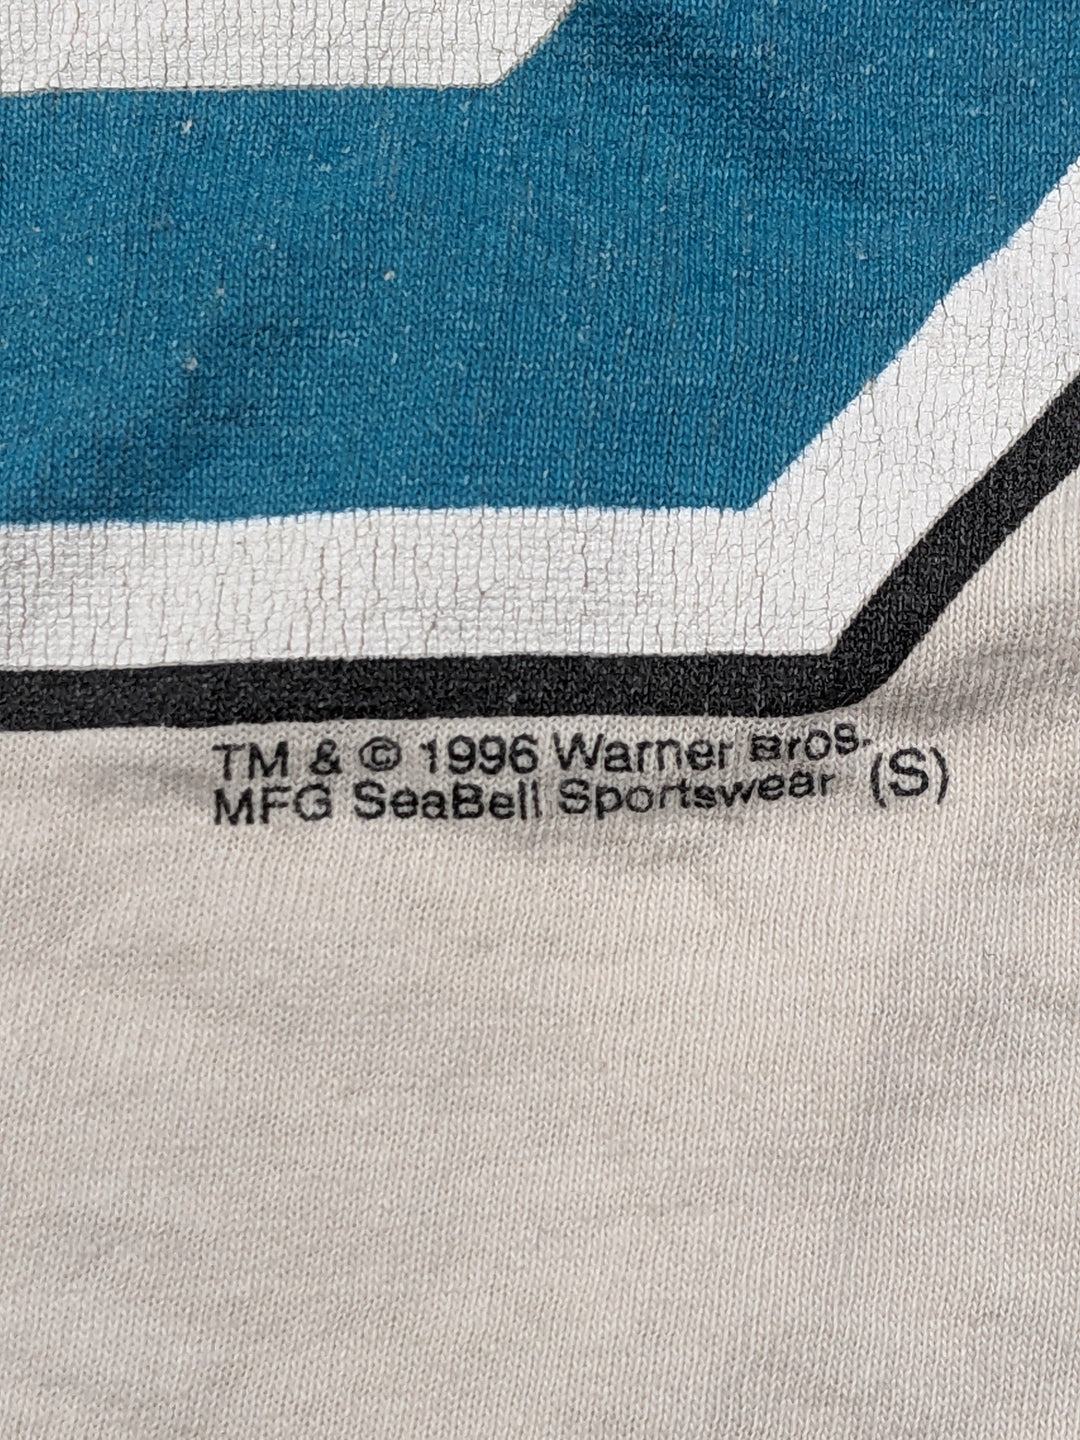 Vintage 1996 Warner Bros T-Shirt 1 pc 1 lb C0422210